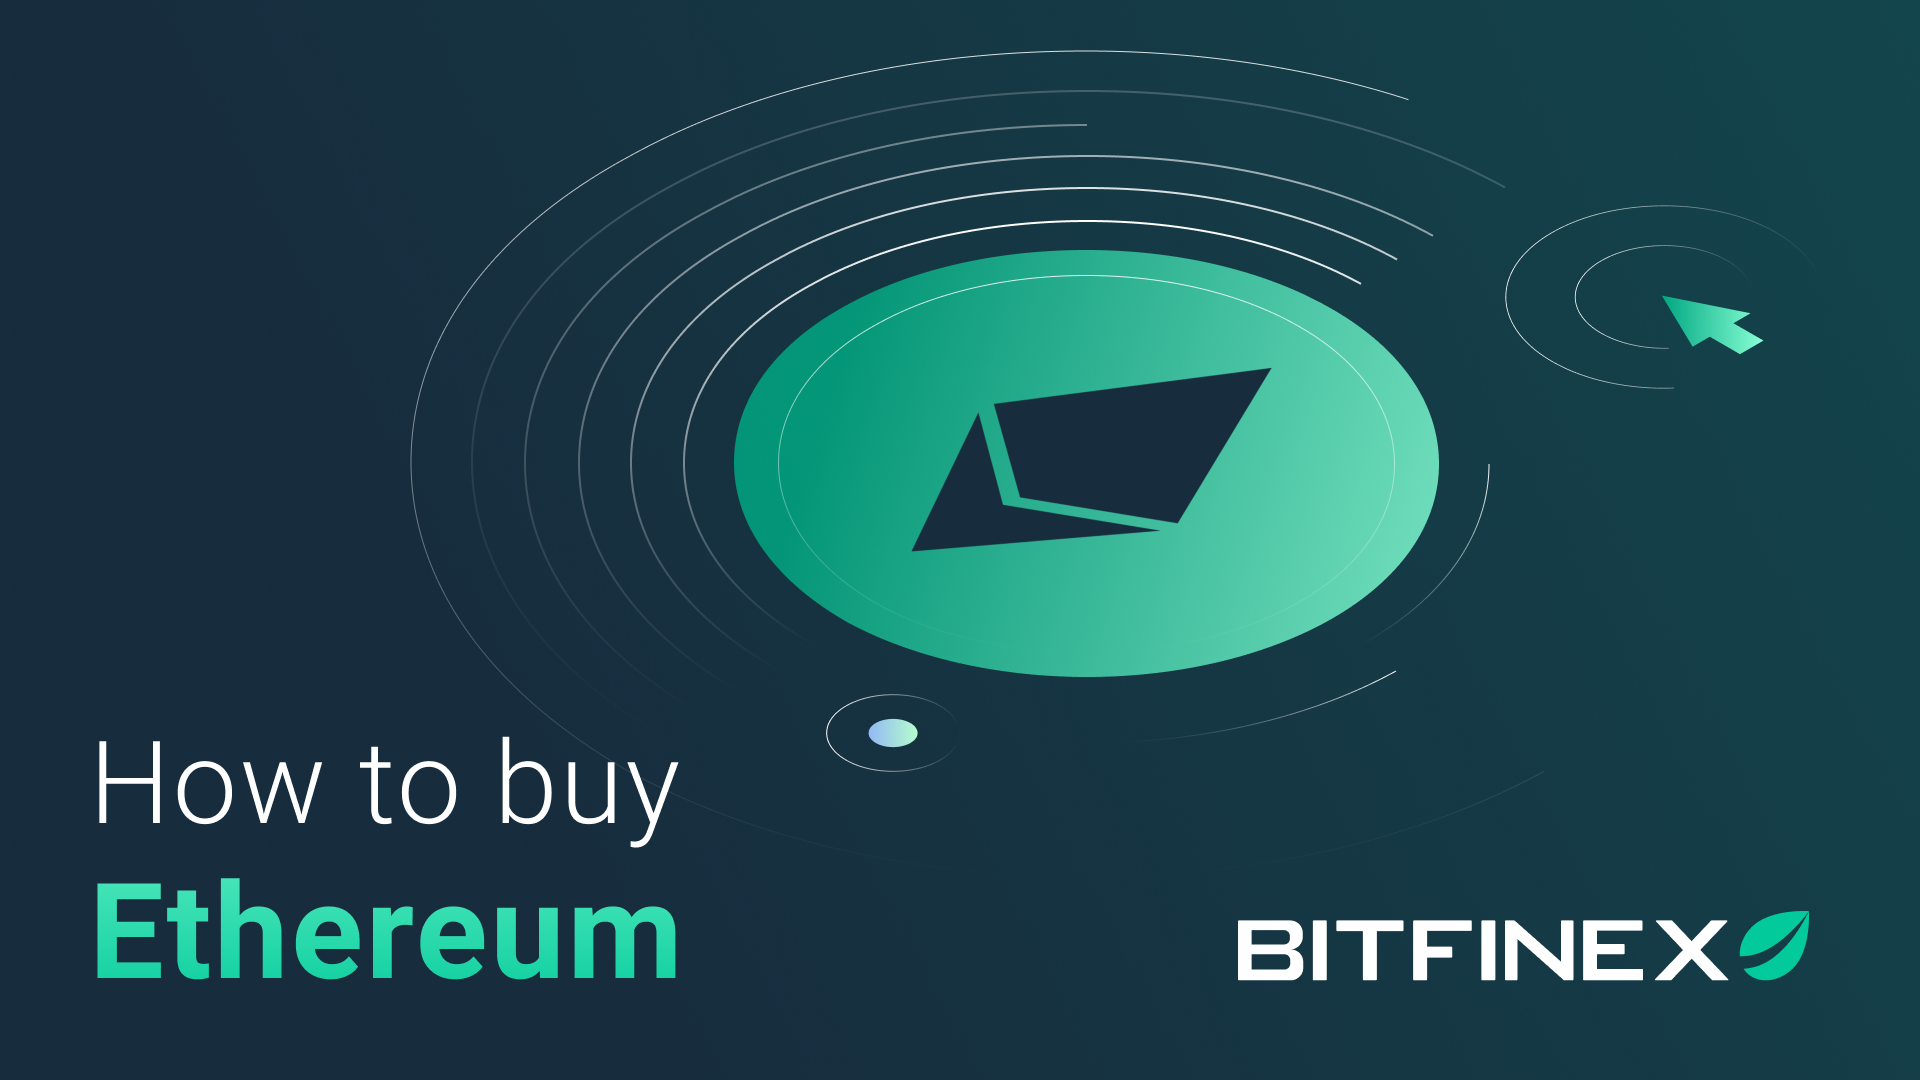 How to buy Ethereum on Bitfinex